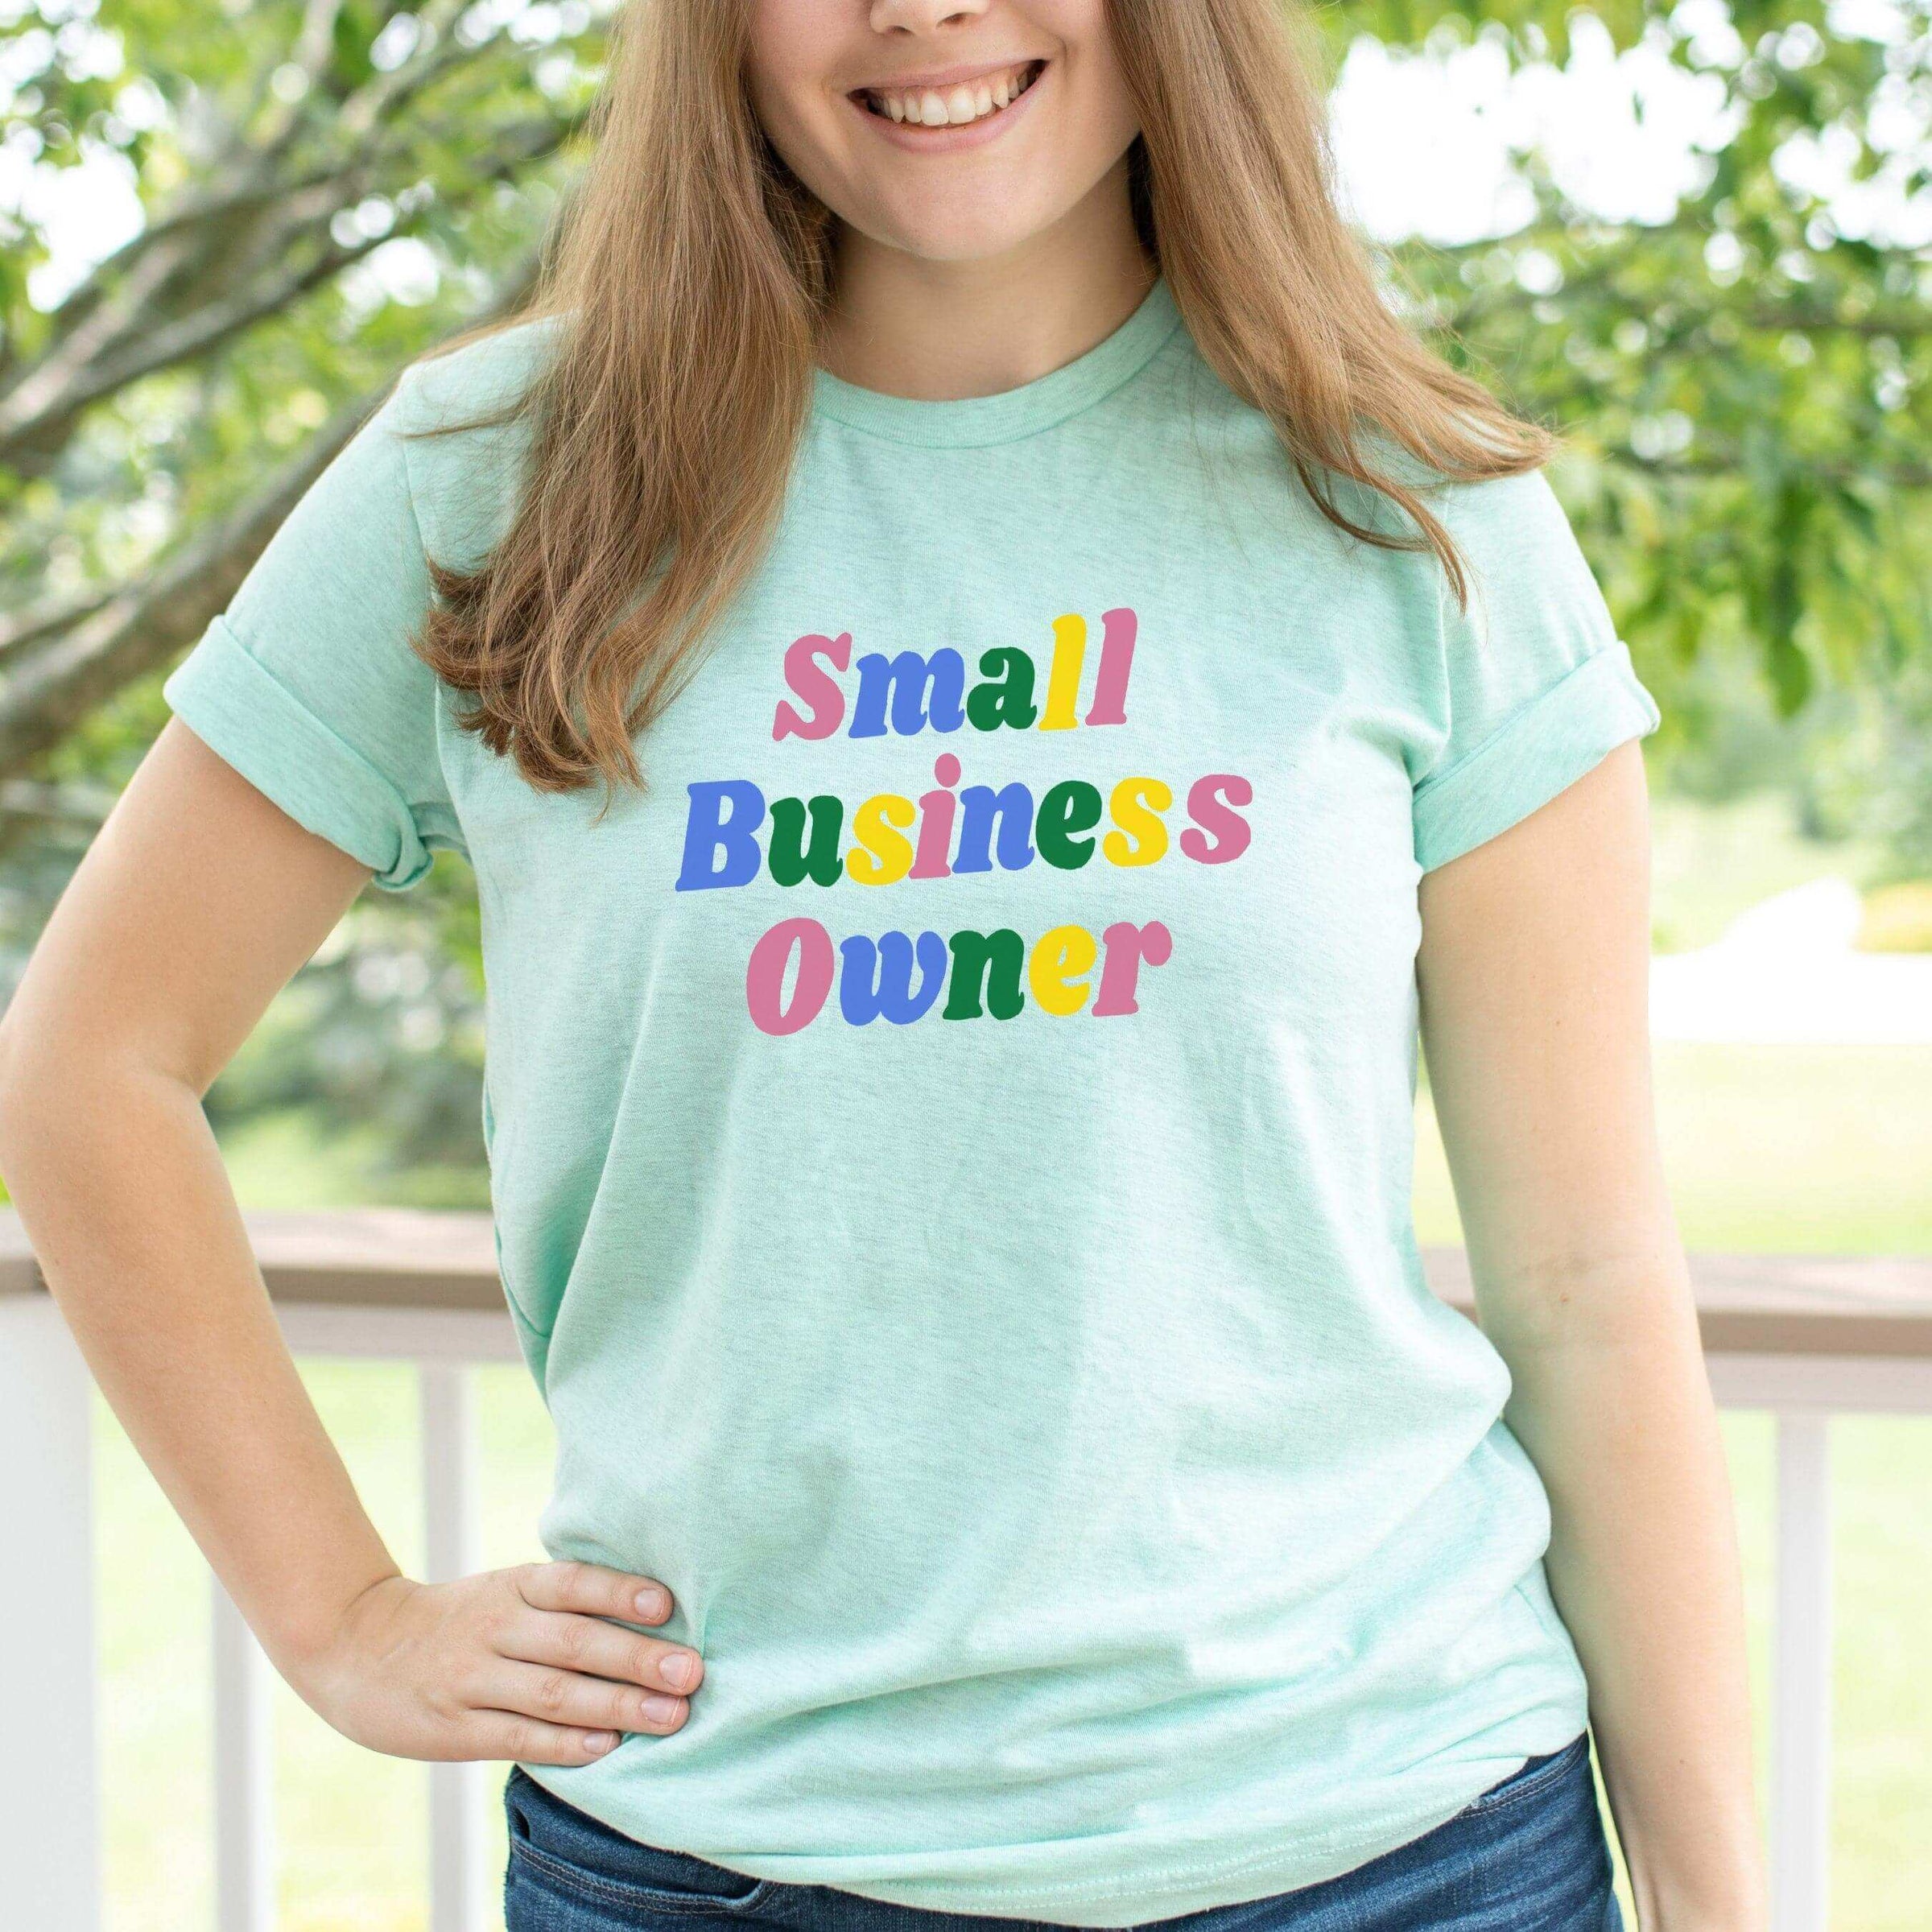 Small Business Owner Shirt, Support Local Shirt, Shop Small and Local, Woman Business Owner Shirt - Winks Design Studio,LLC